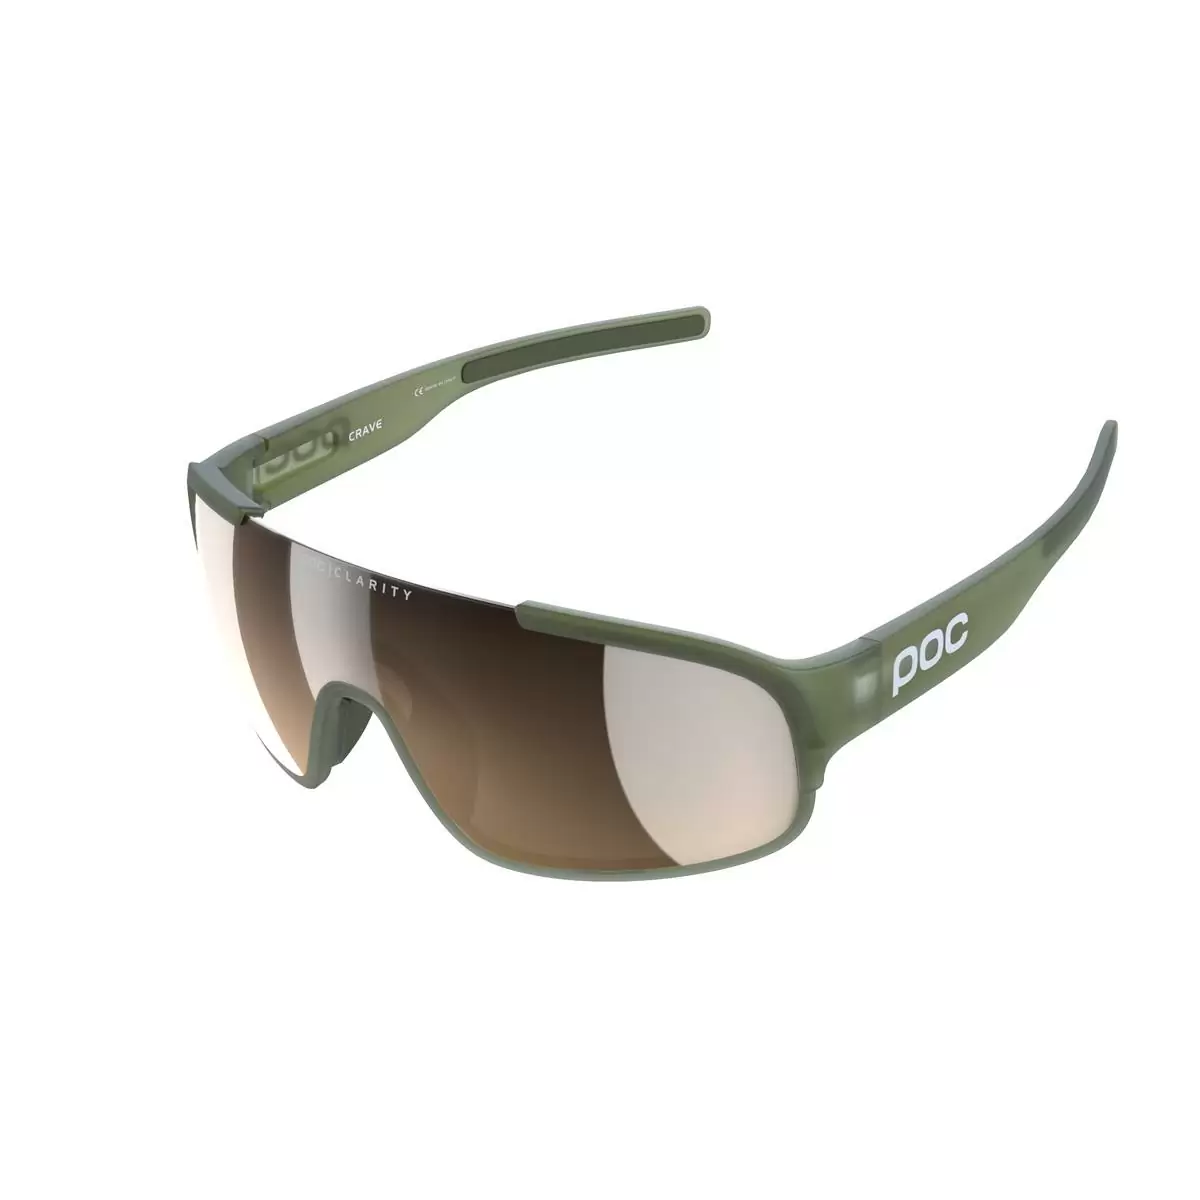 Crave Sunglasses Epidote Green Brown/Silver Mirror Lens - image